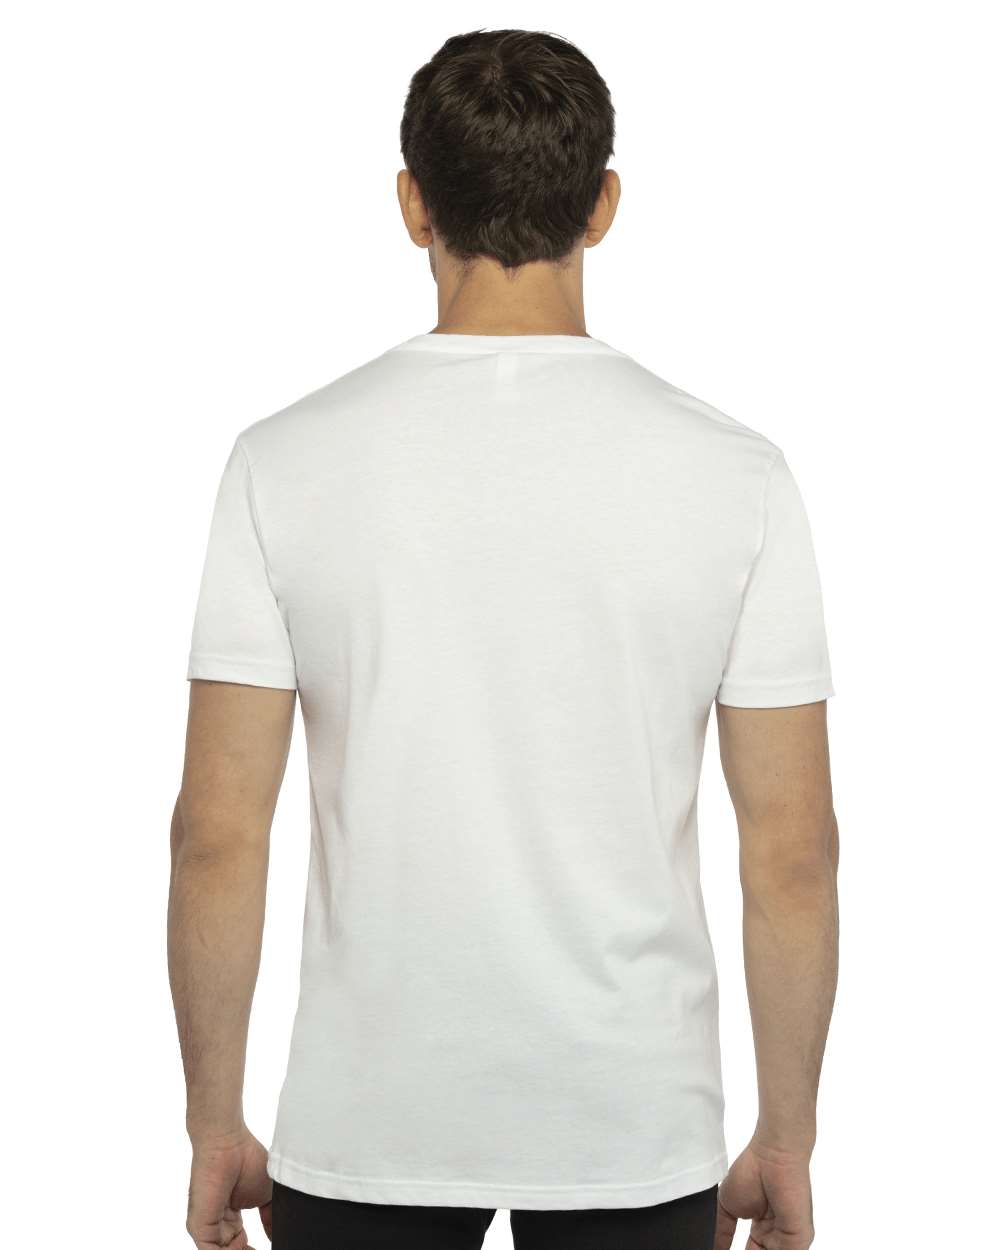 Next Level - Cotton V-Neck T-Shirt - 3200